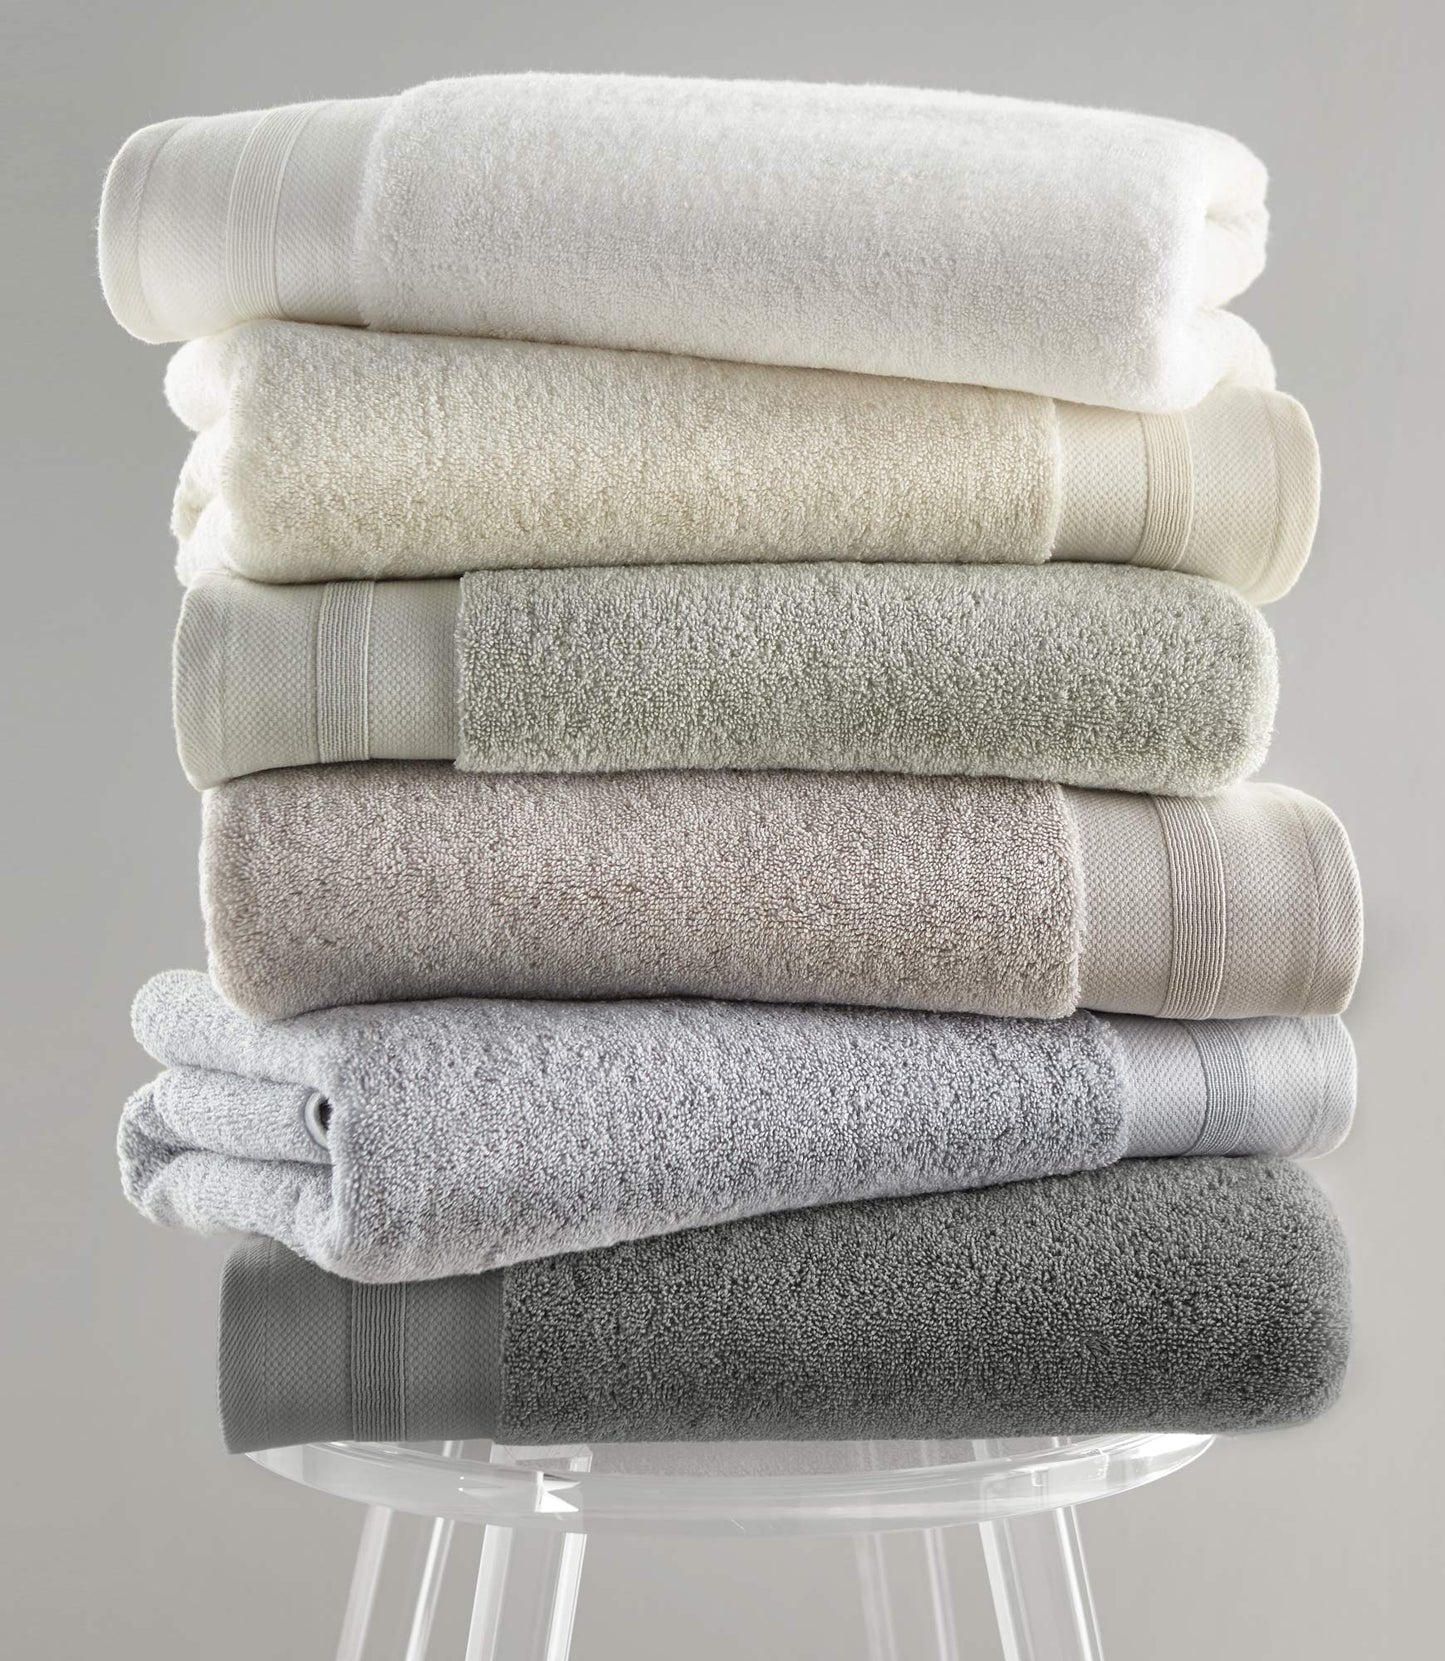 Coronado Luxe Bath Towels Stacked